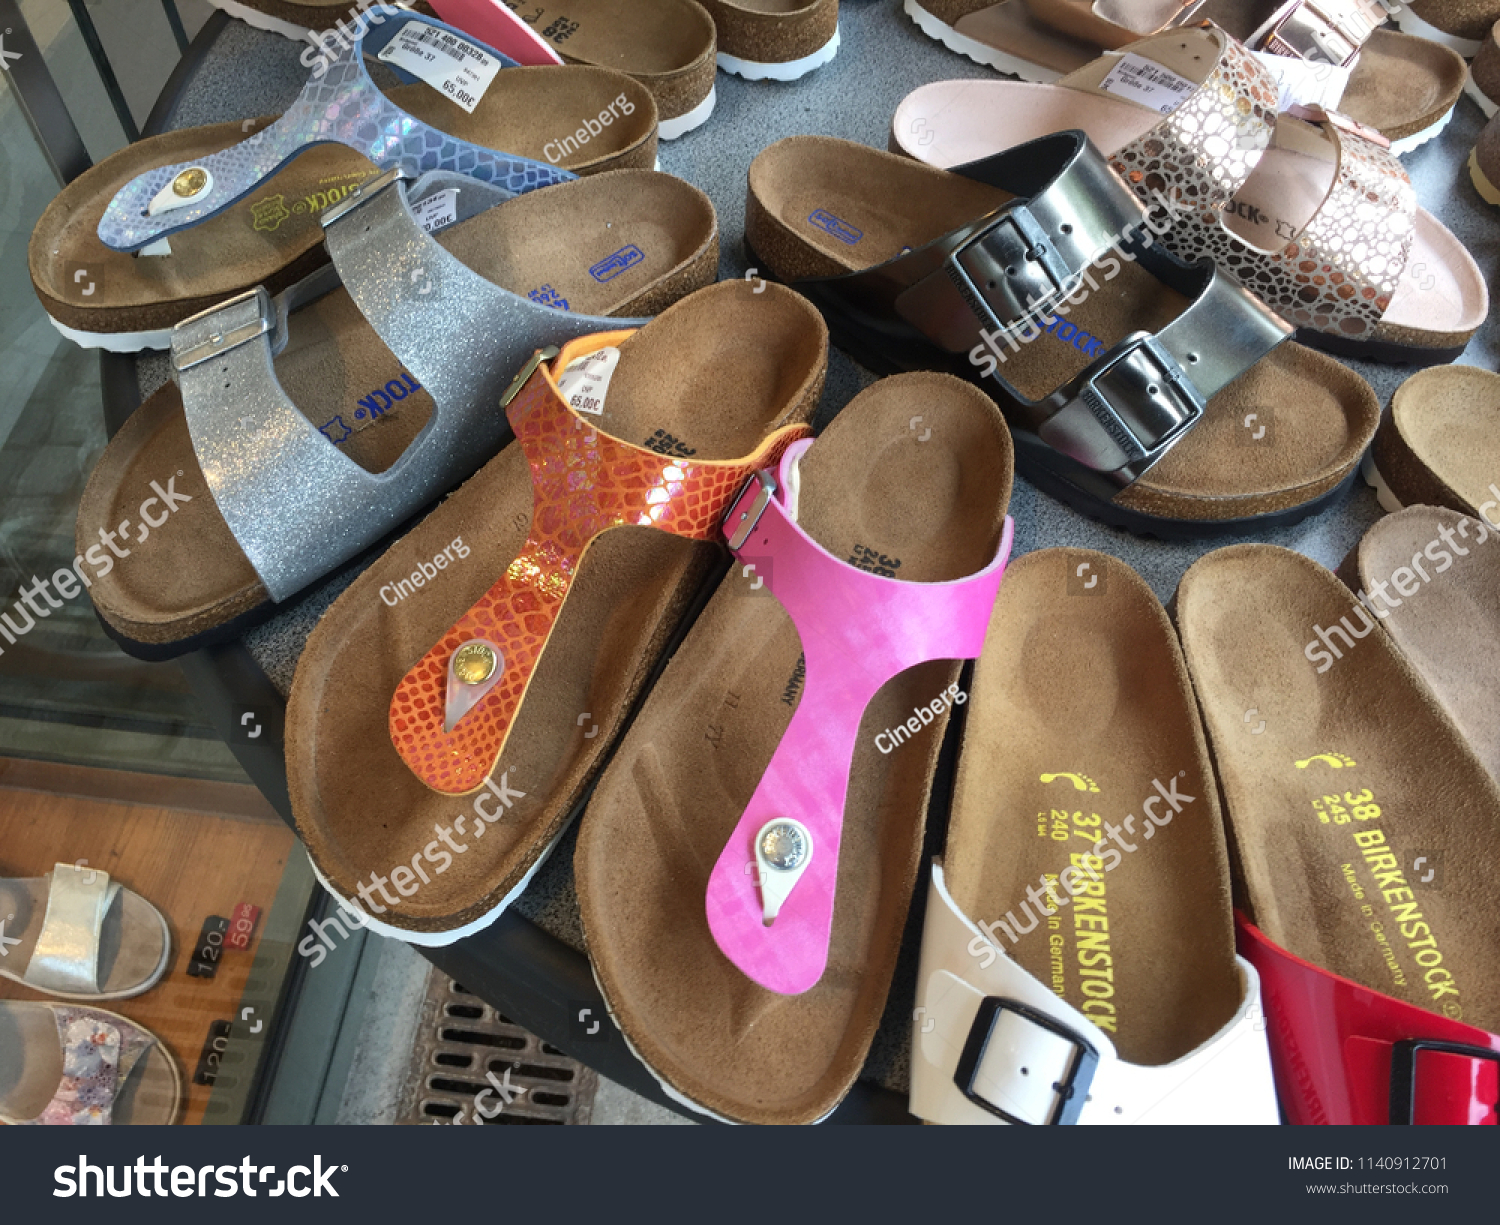 shoe stores that sell birkenstocks